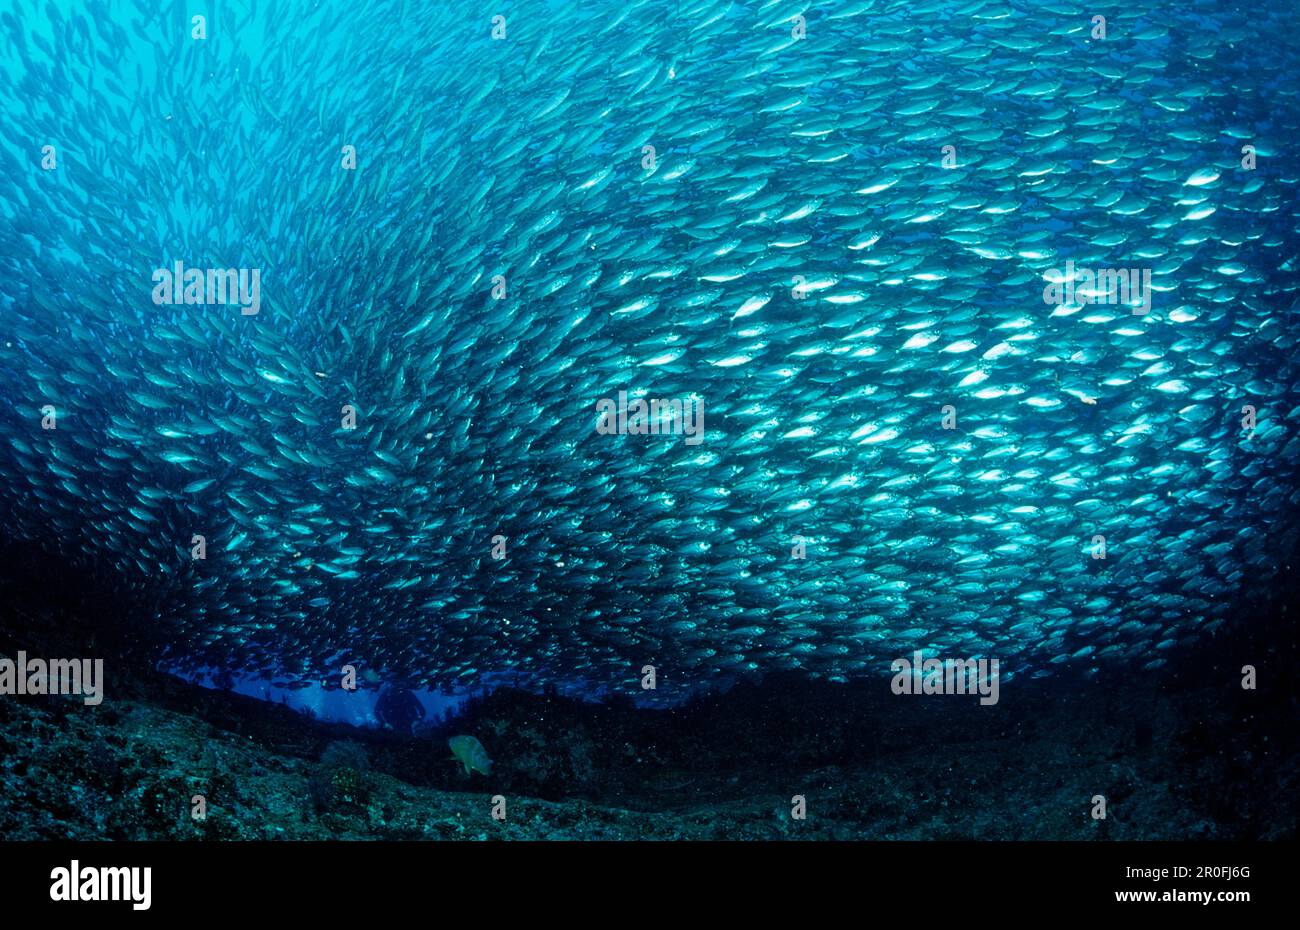 Schooling Pacific chub mackerel, Macarela estornino, Scomber japonicus, Mexico, Sea of Cortez, Baja California, La Paz Stock Photo